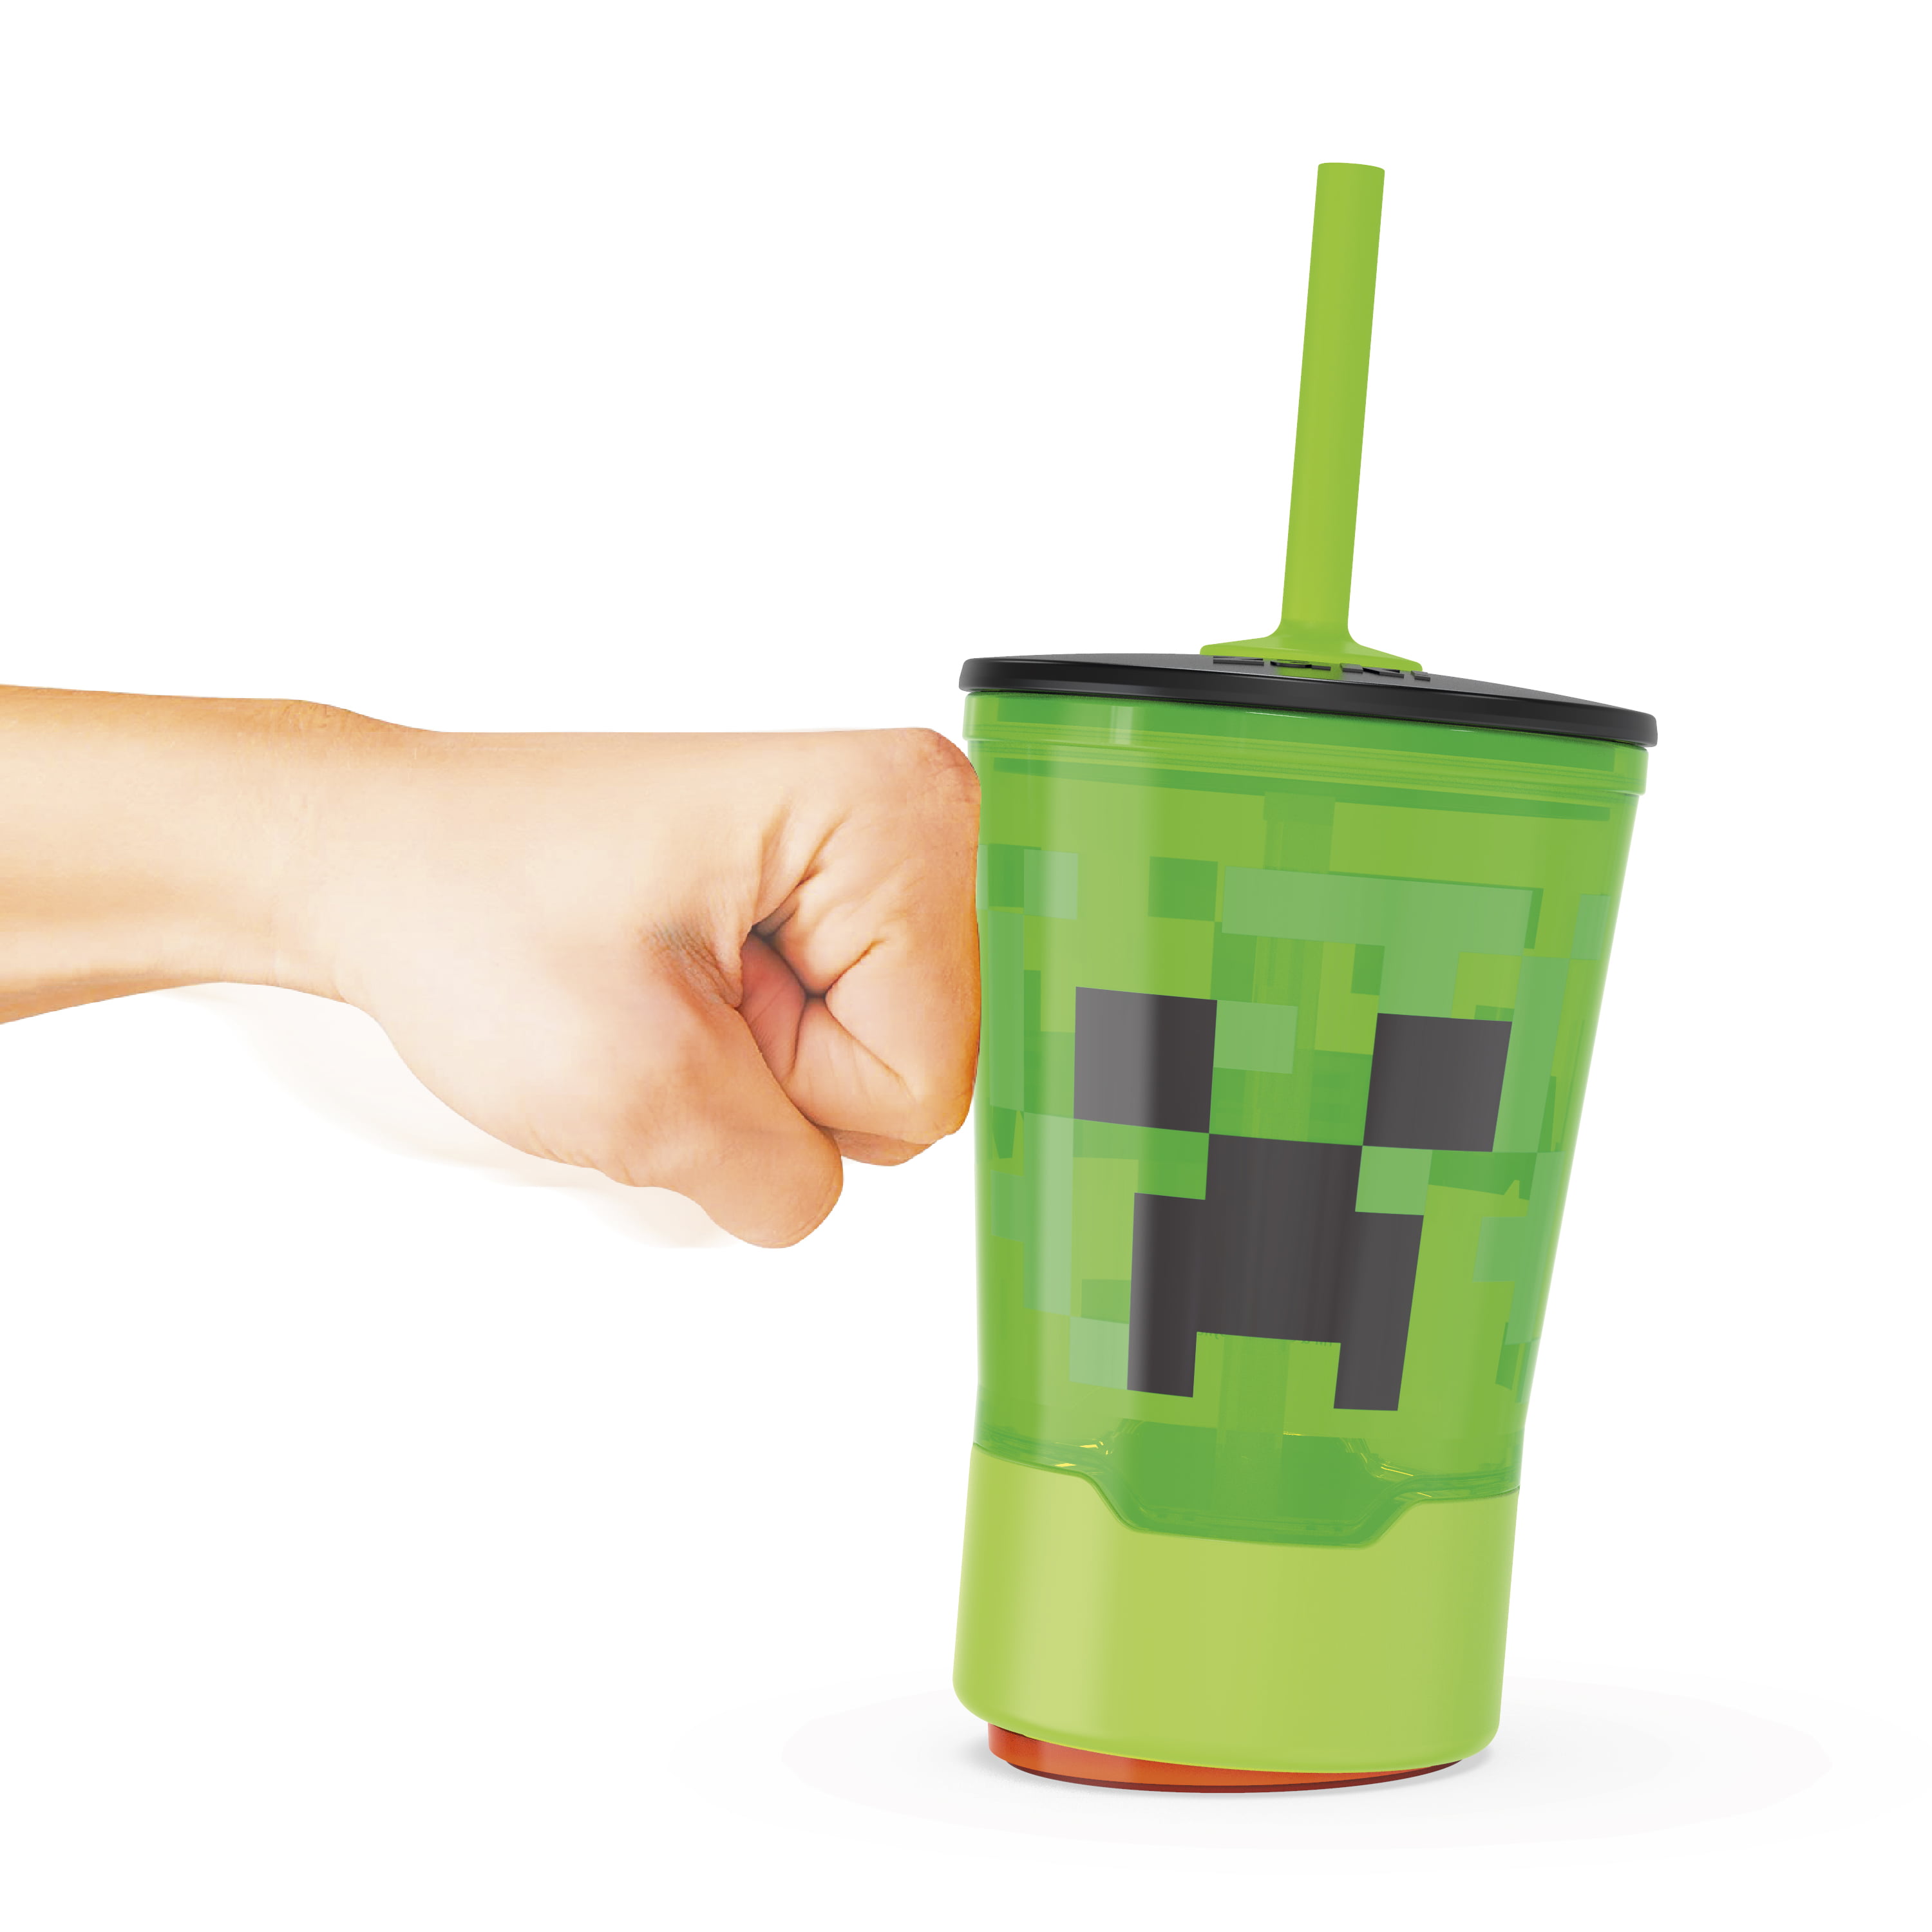 Minecraft tumbler  Custom tumbler cups, Custom tumblers, Tumbler cups diy